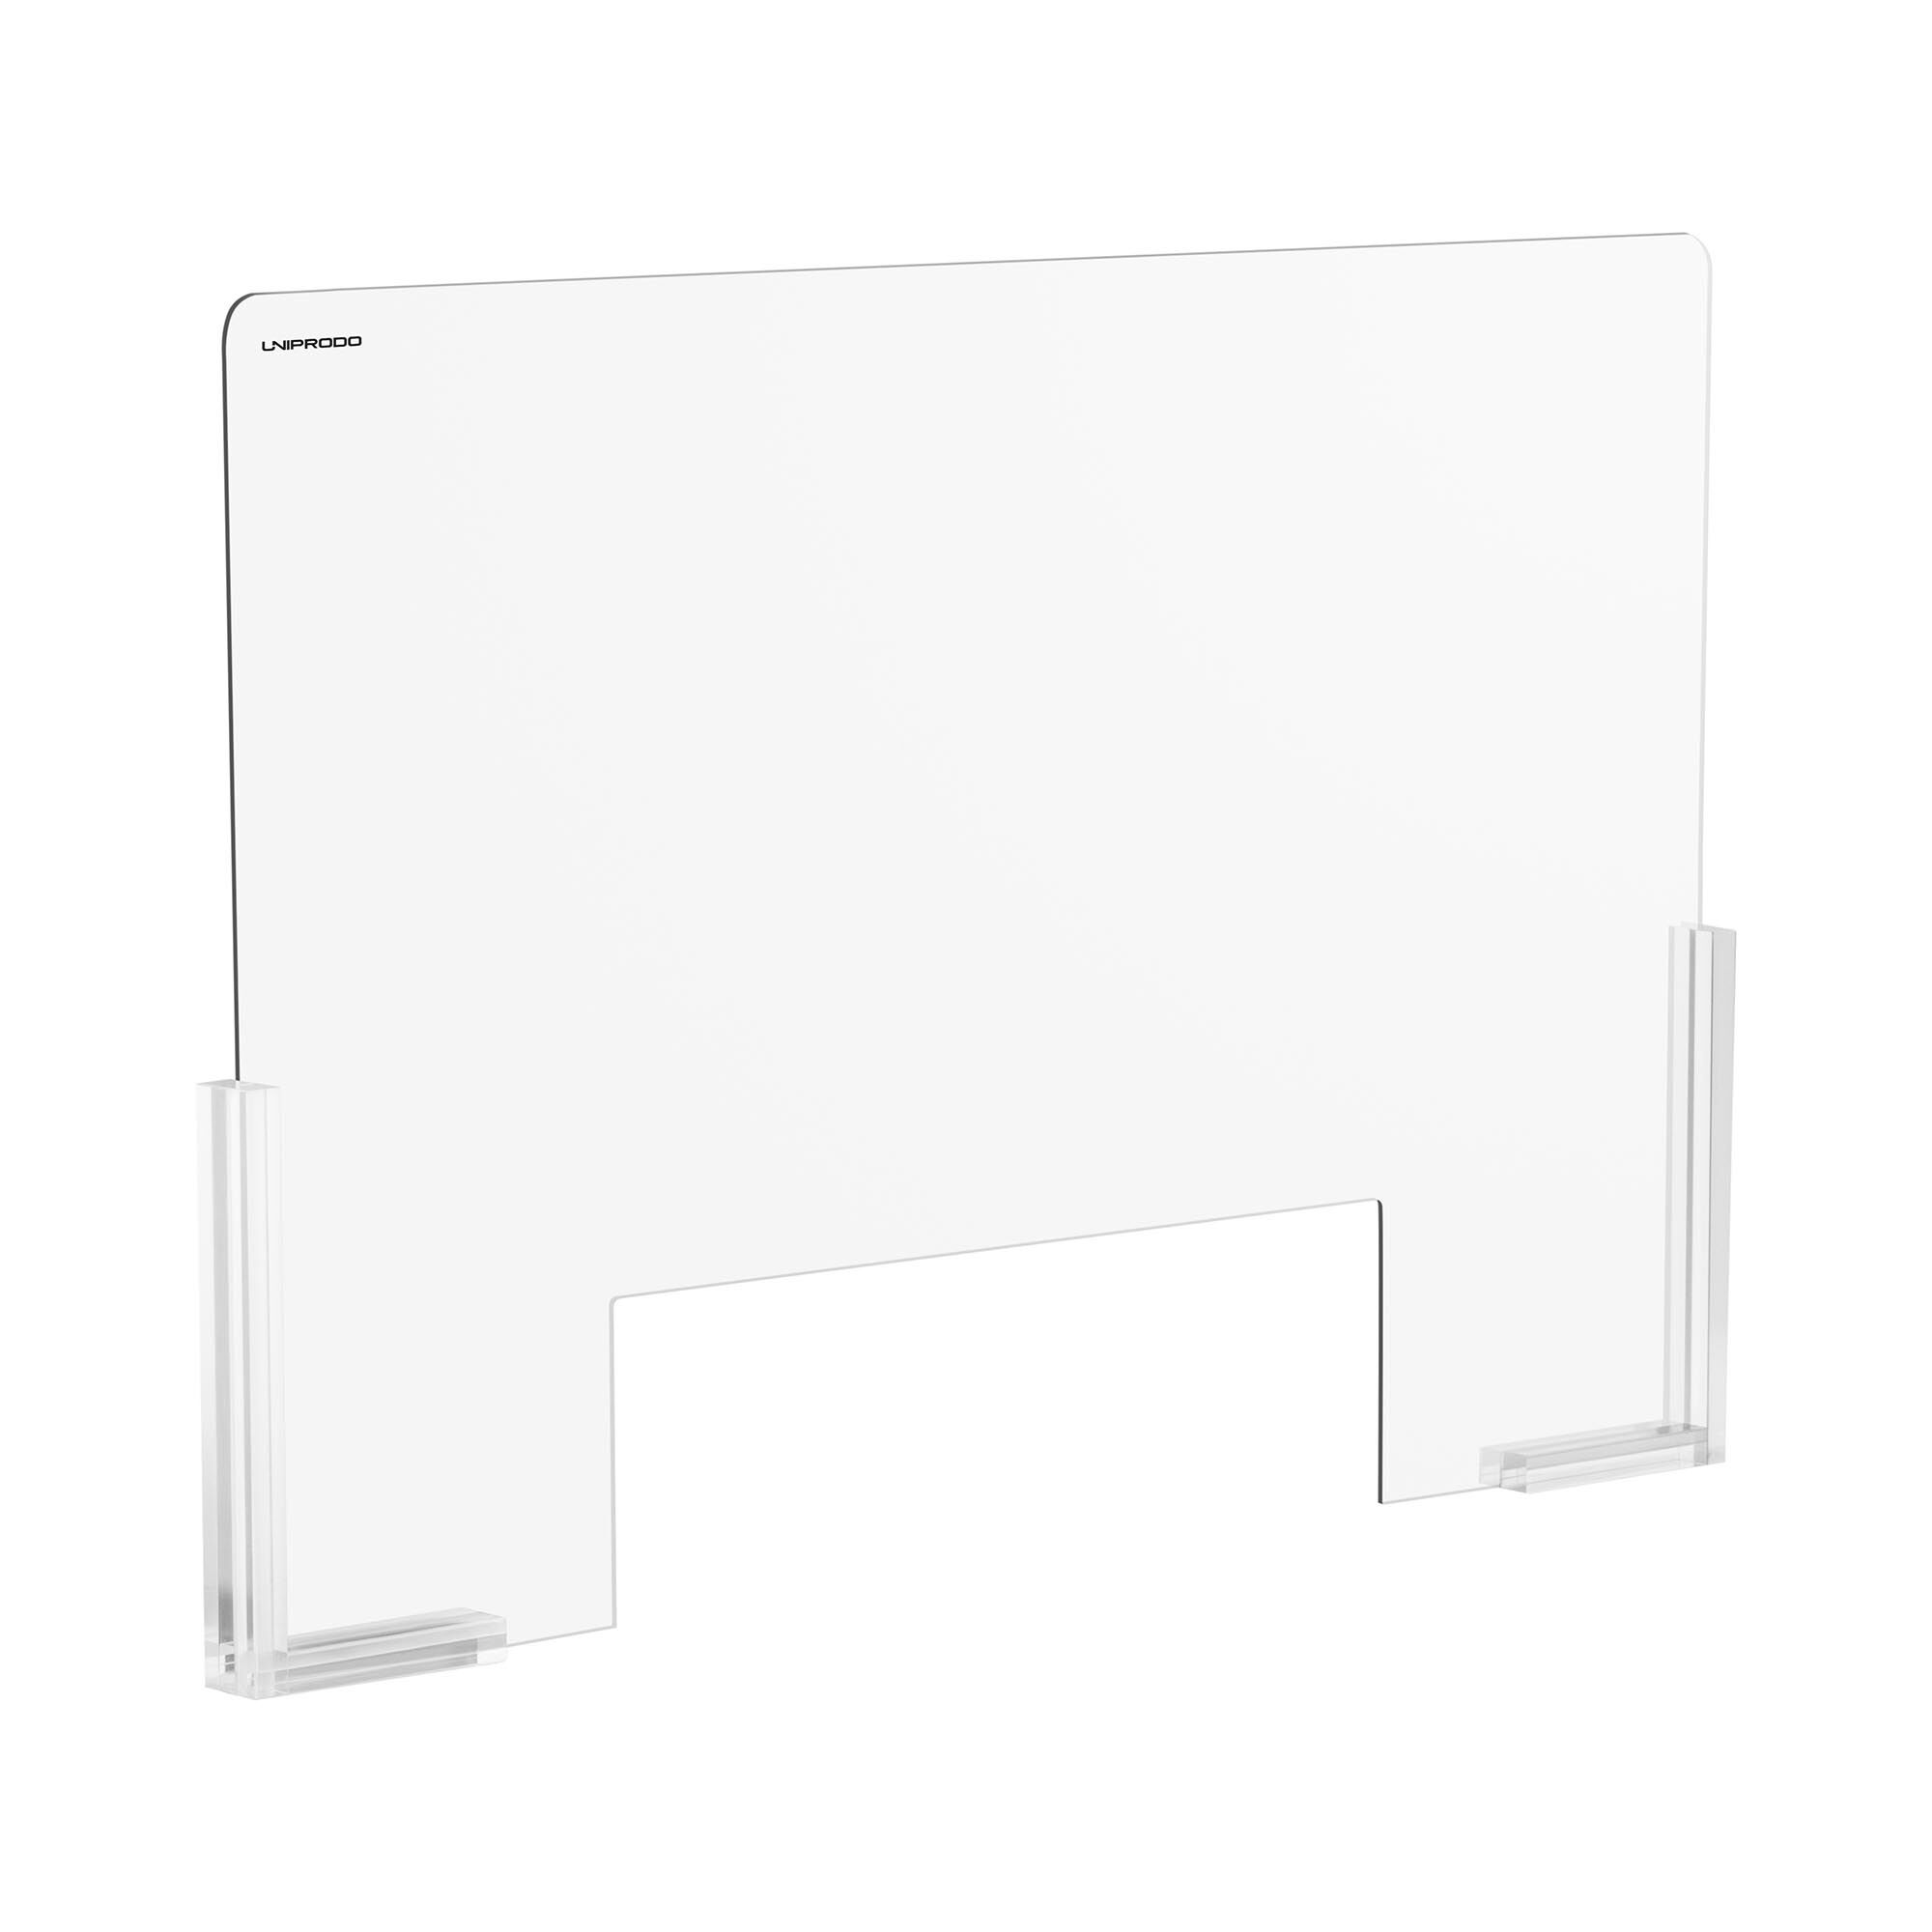 Uniprodo Hoestscherm - 95 x 65 cm - Acrylglas - doorlaat 38 x 25 cm UNI-PPG03